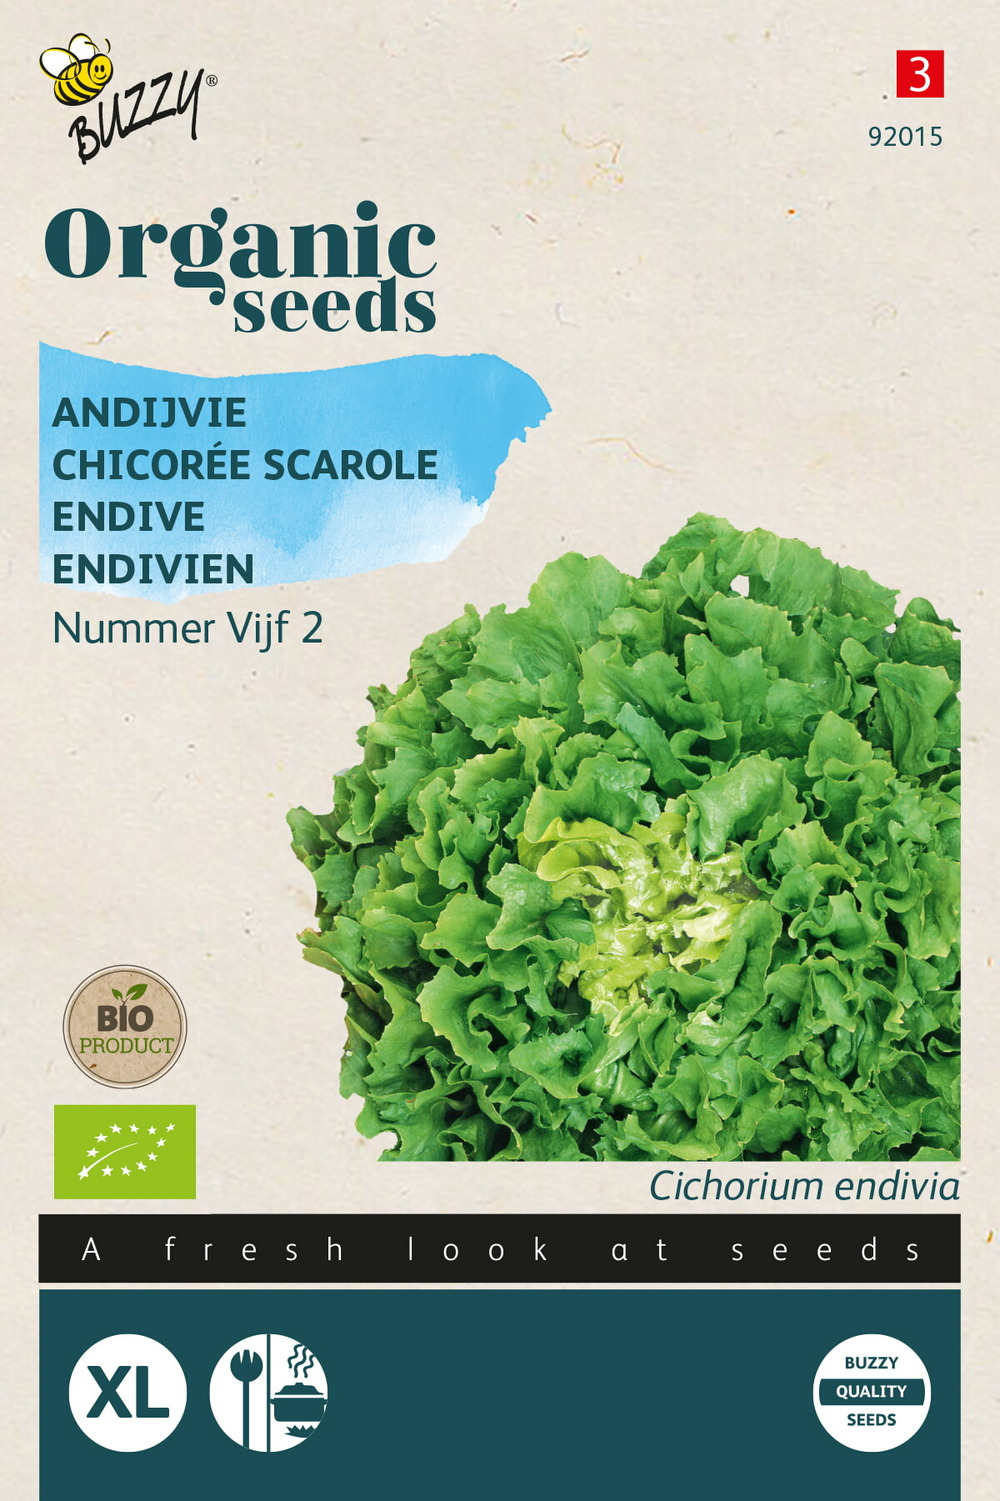 Buzzy organic chicorée scarole grosse bouclée 2 (bio) - ca. 1 gr